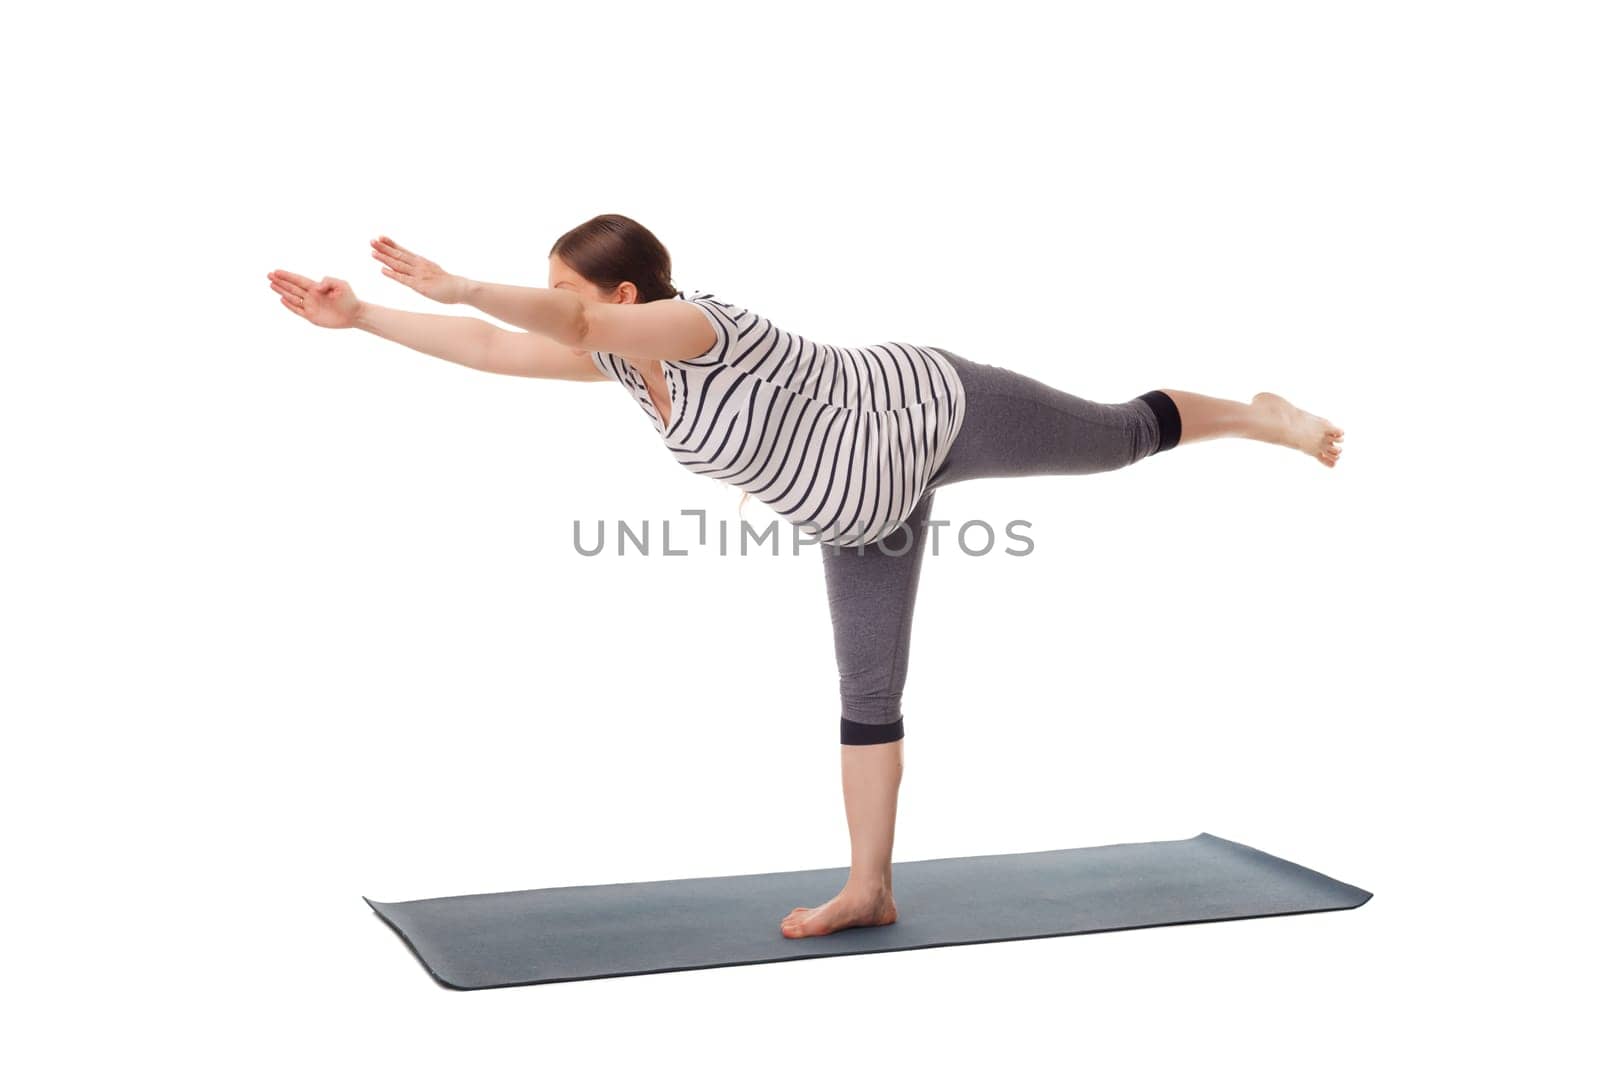 Pregnancy yoga exercise - pregnant woman doing asana virabhadrasana 3 - warrior pose isolated on white background